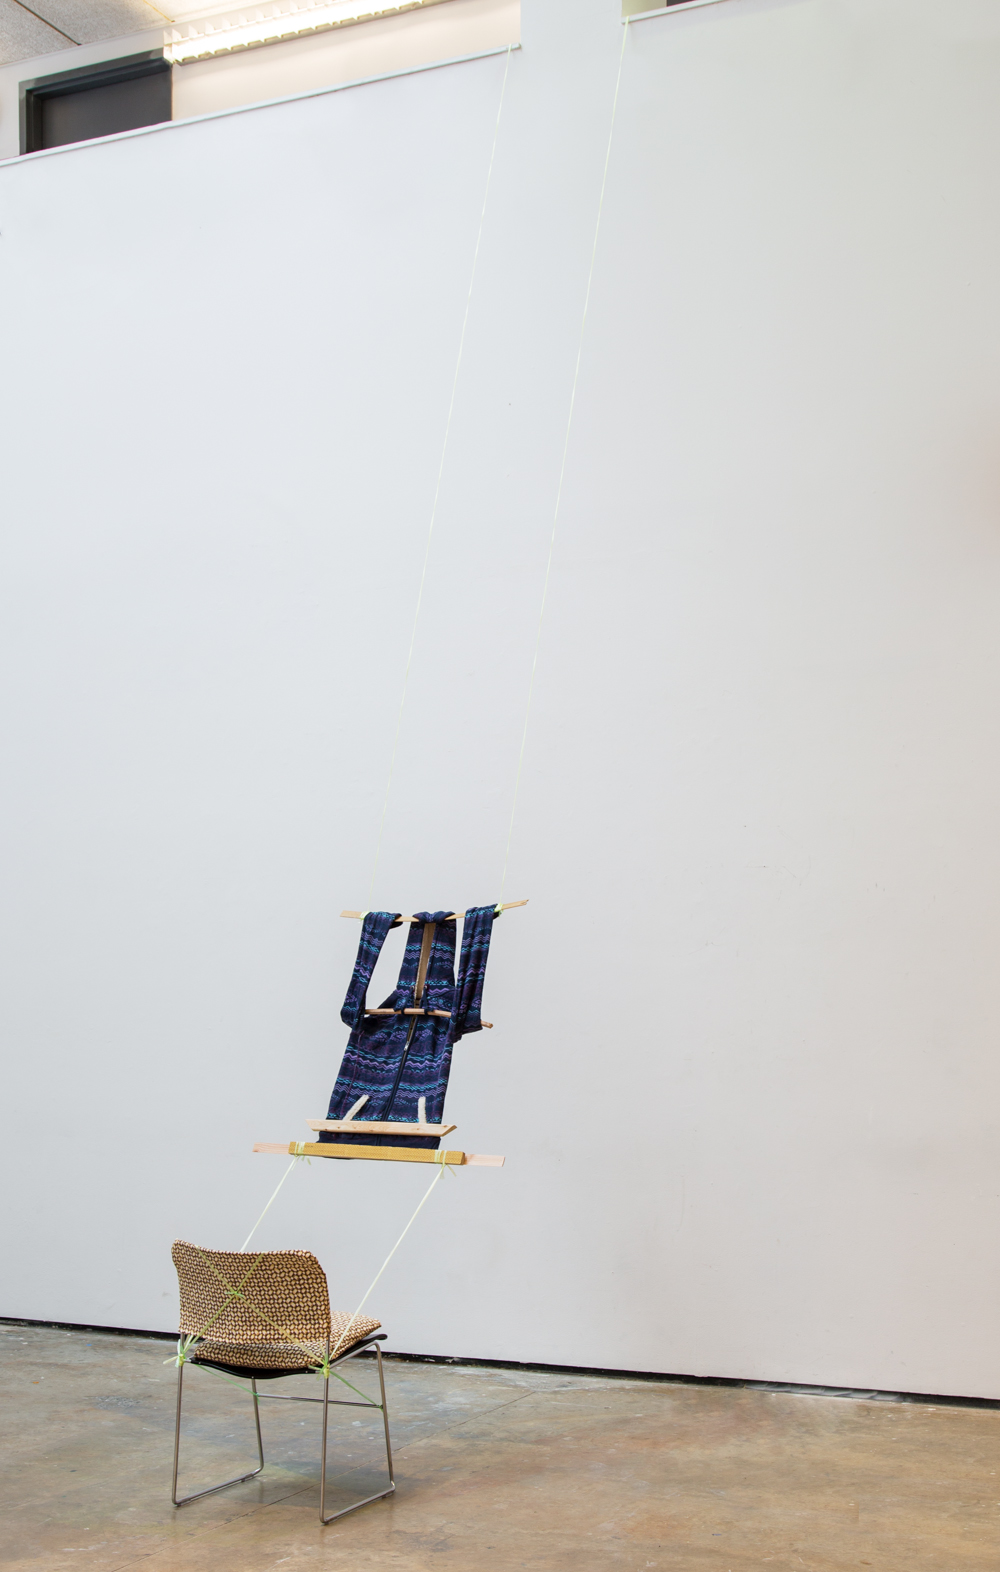  Loom, 2014, hoodie, plastic chord, wood, custom Banig-print fabric chair covering, Yale critique chair, 240 x 20 x 20 inches 